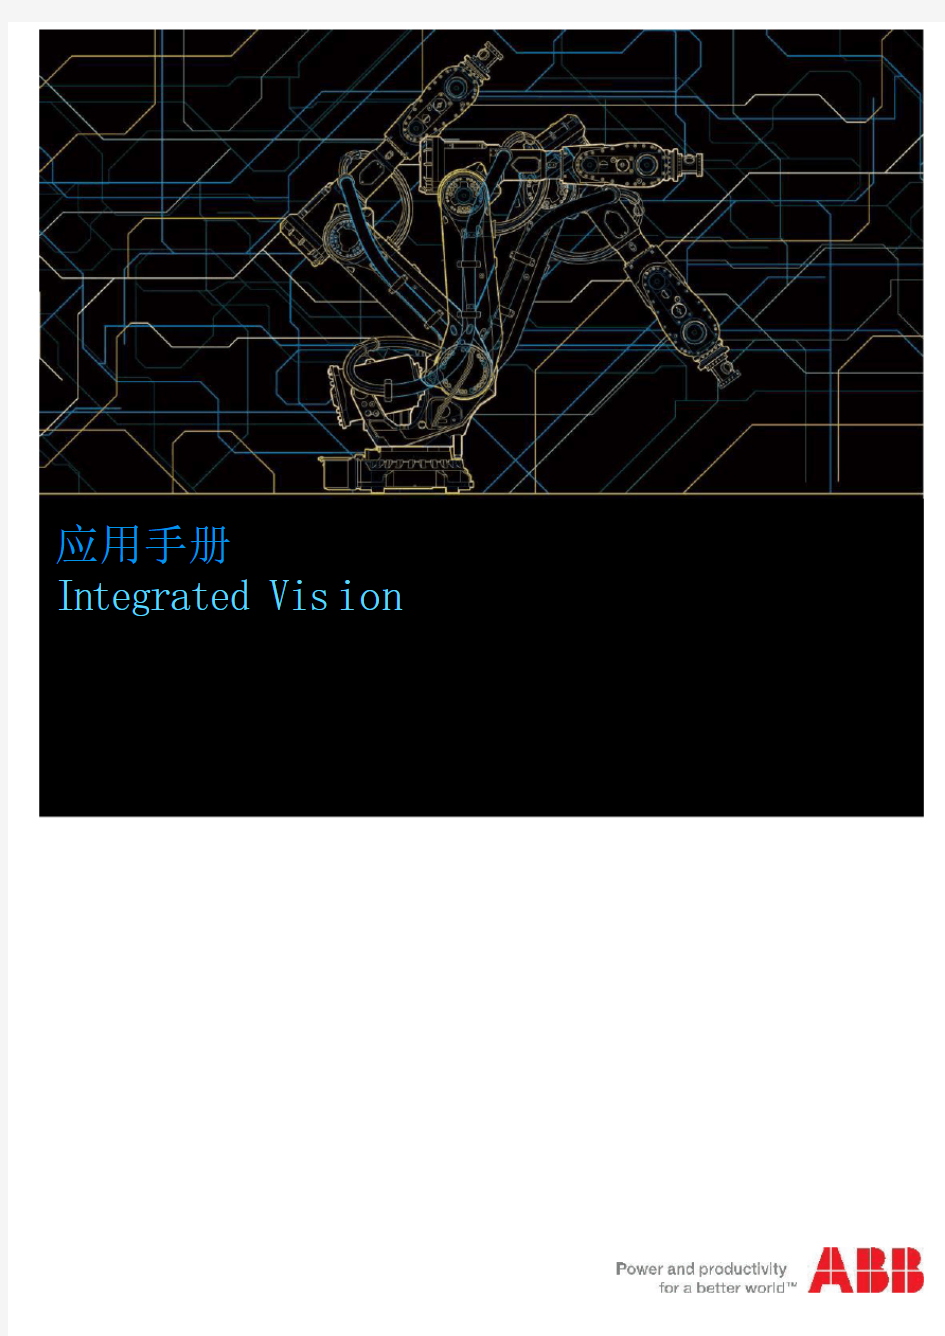 abb工业机器人集成视觉应用手册(中文)